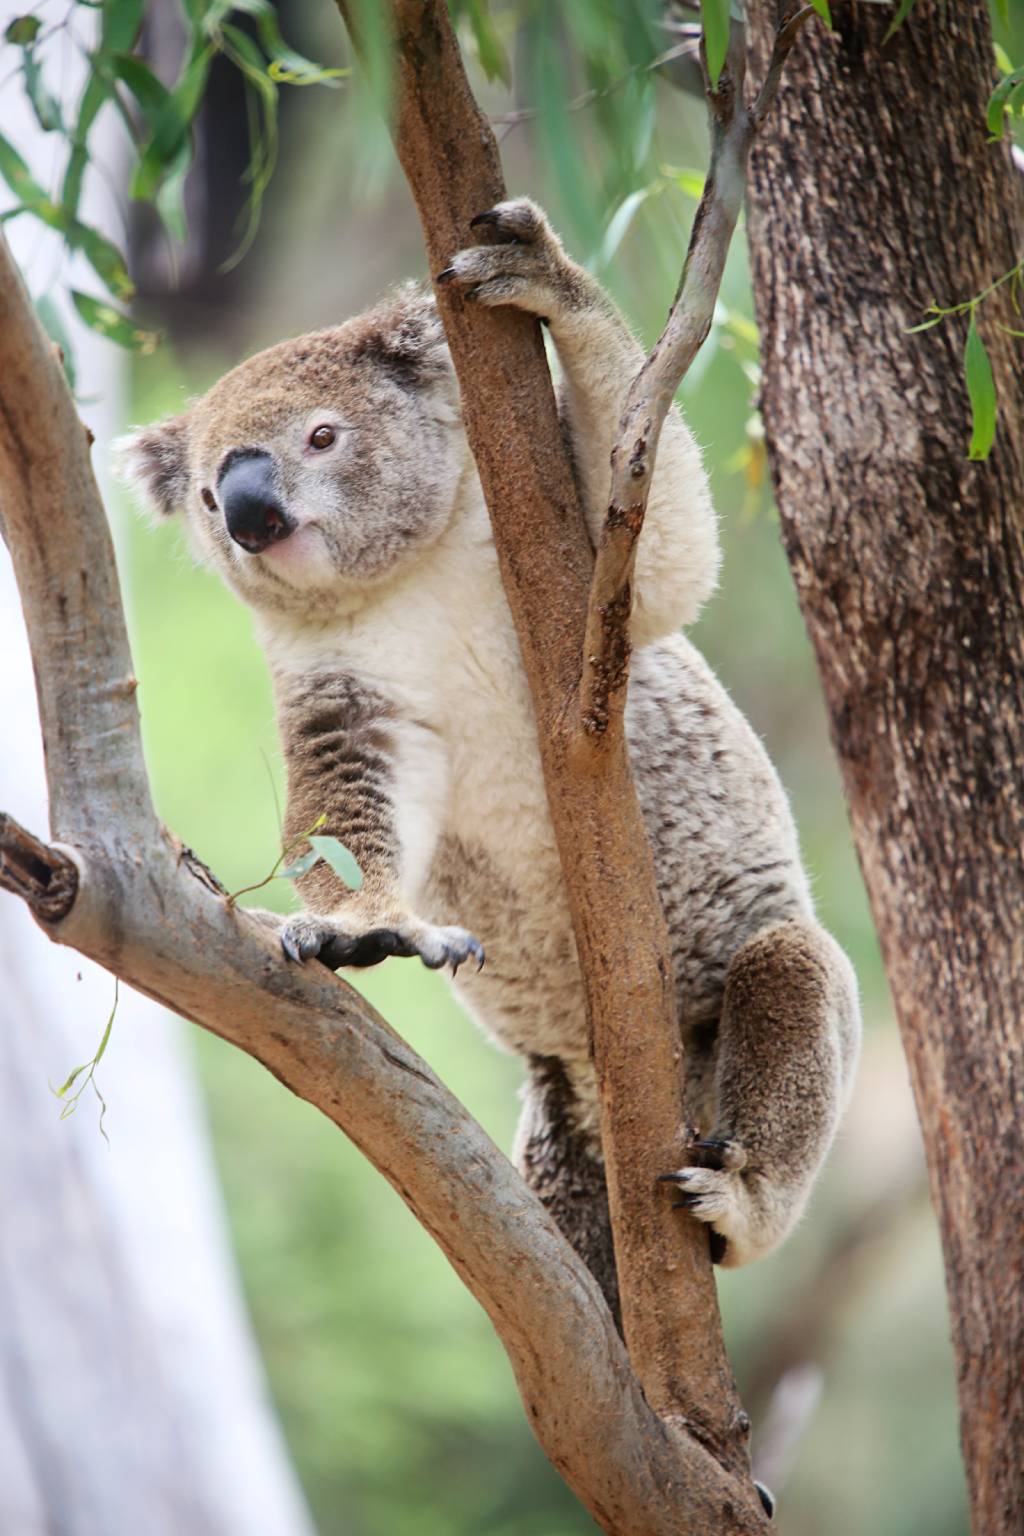 Koala up in the tree looking down